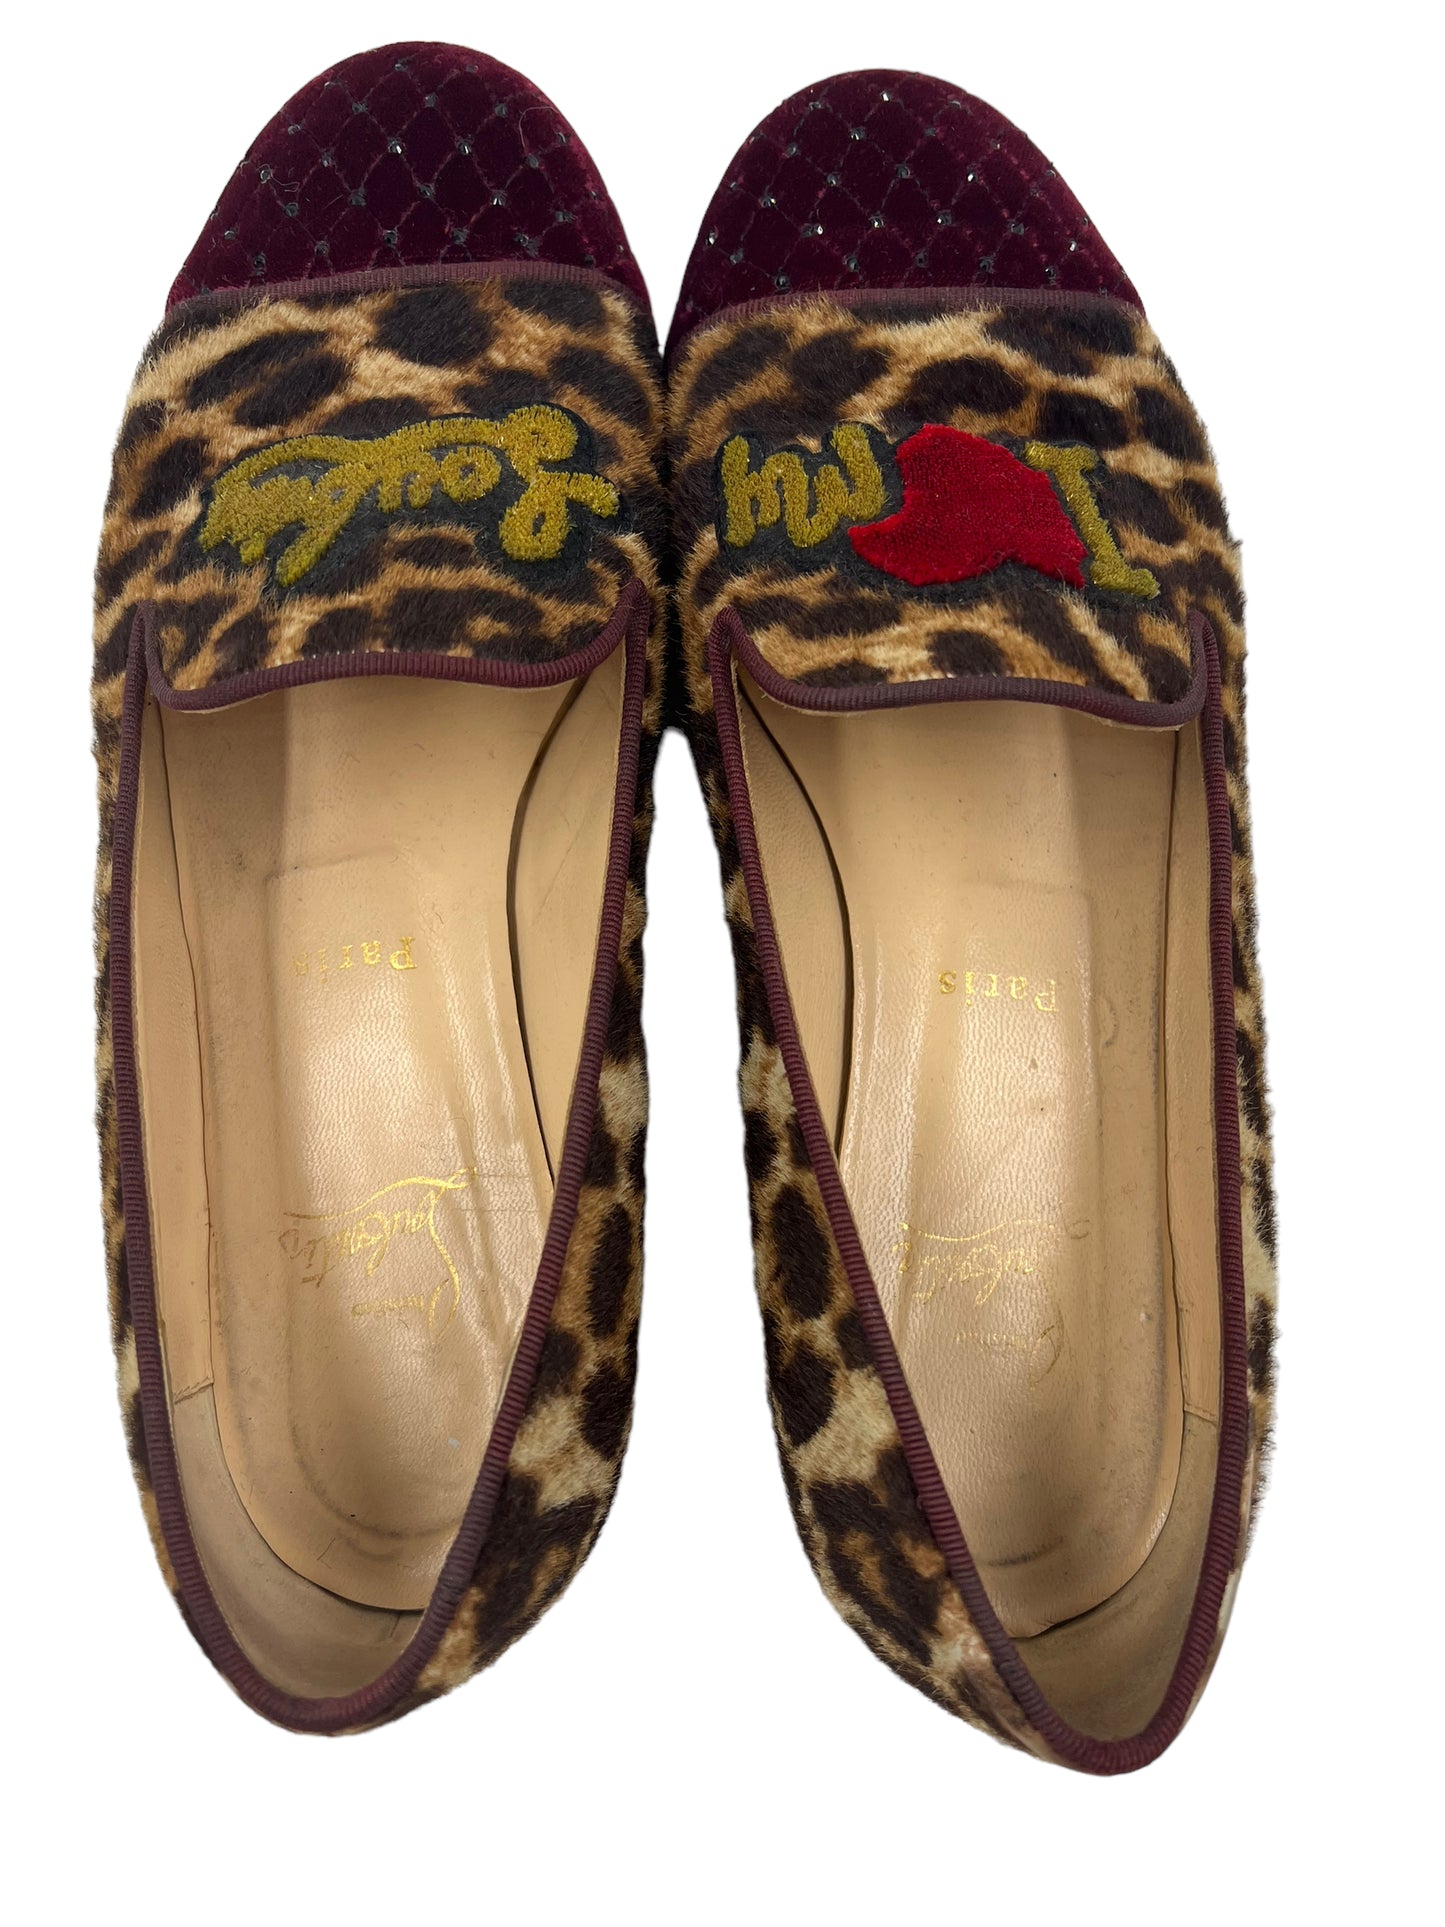 Christian Louboutin 'I Love My Loubies' Size 39.5 Leopard Print Loafers